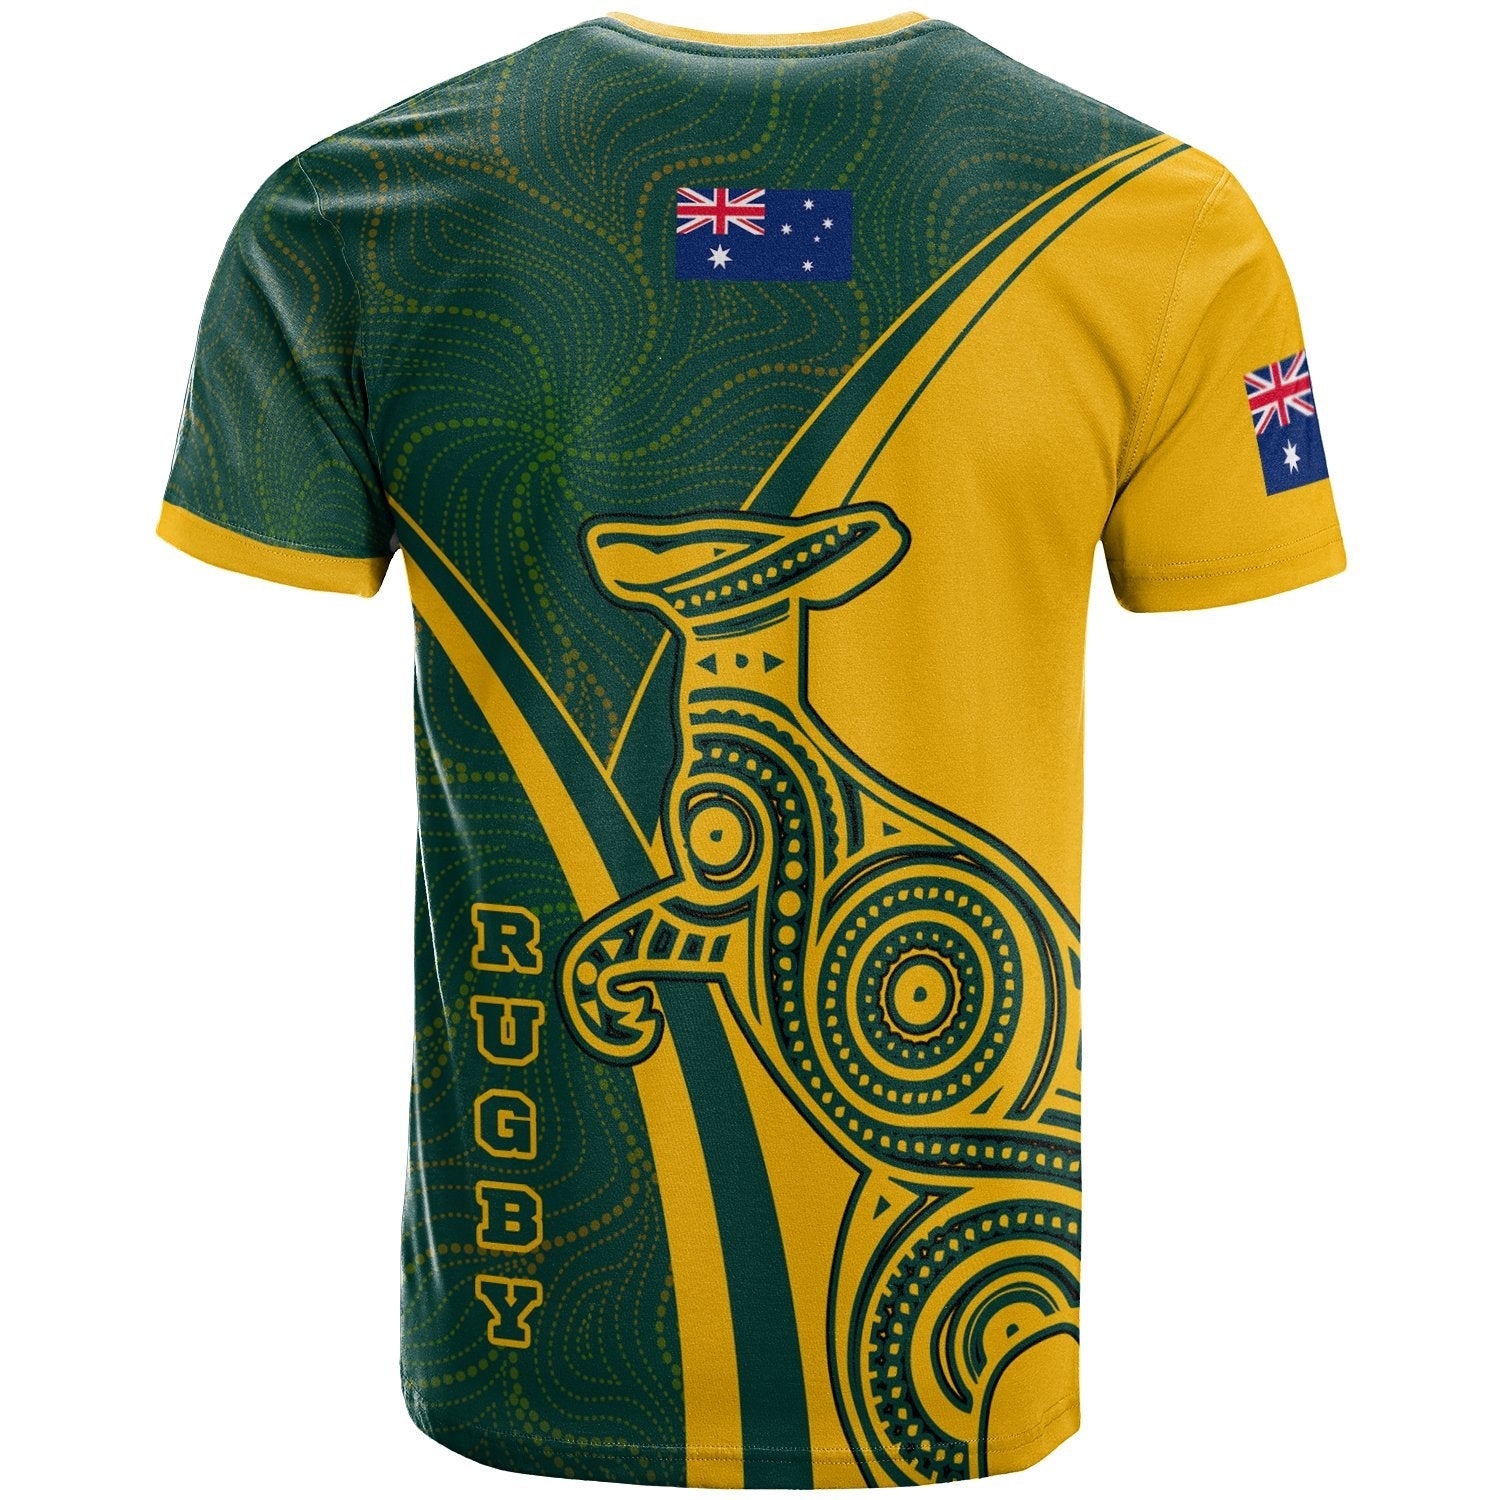 rugby-t-shirt-australian-rugby-kangaroo-aboriginal-patterns